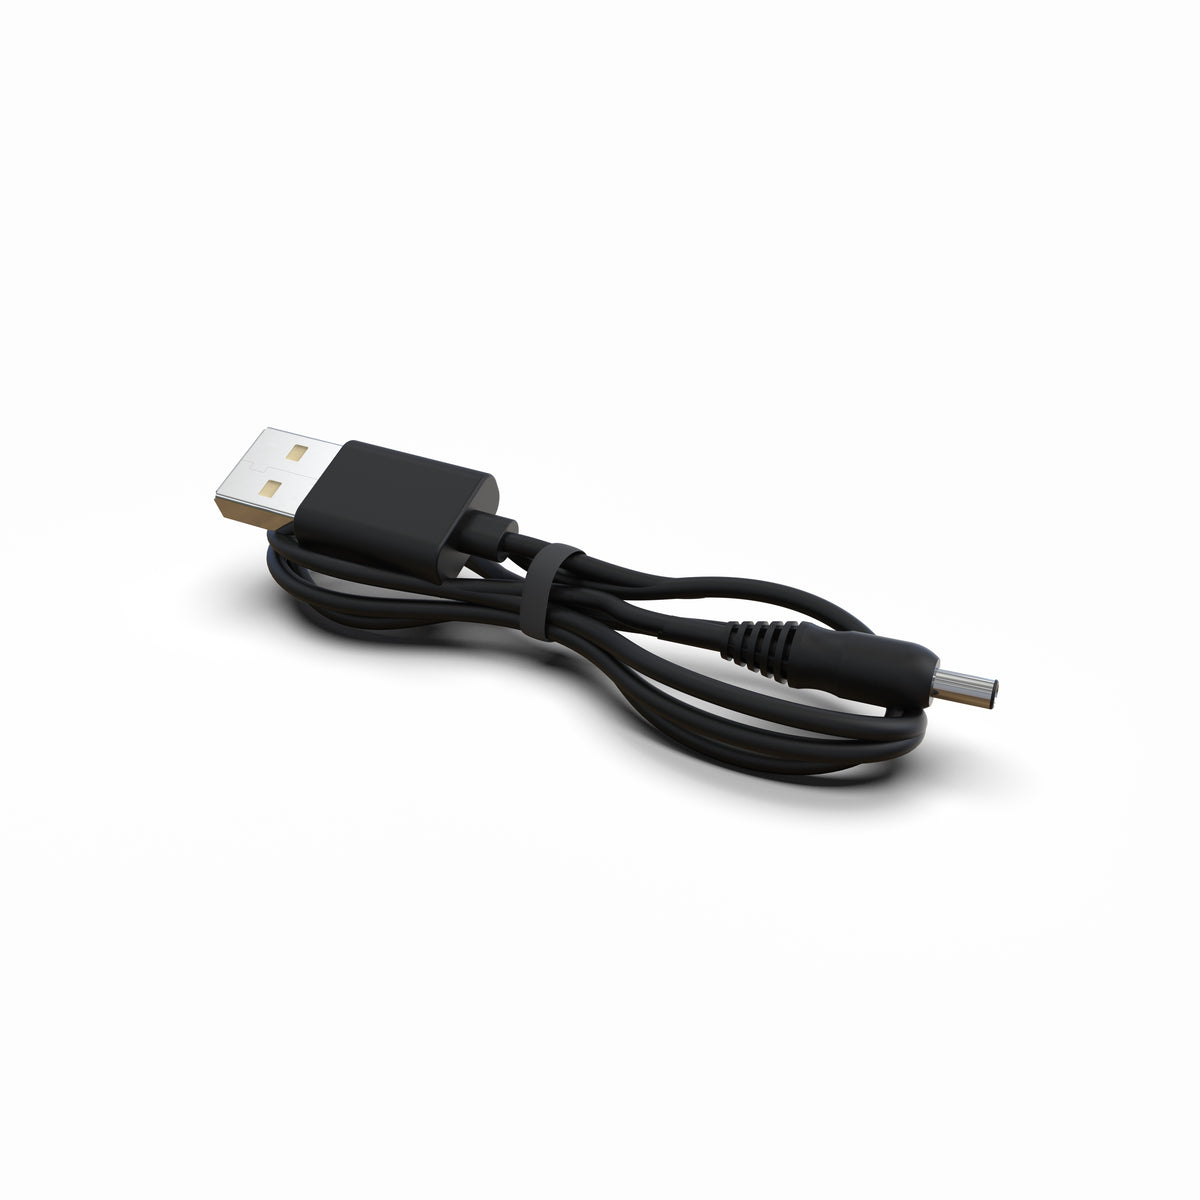 USB Charging Cord (HV1 HandVac)